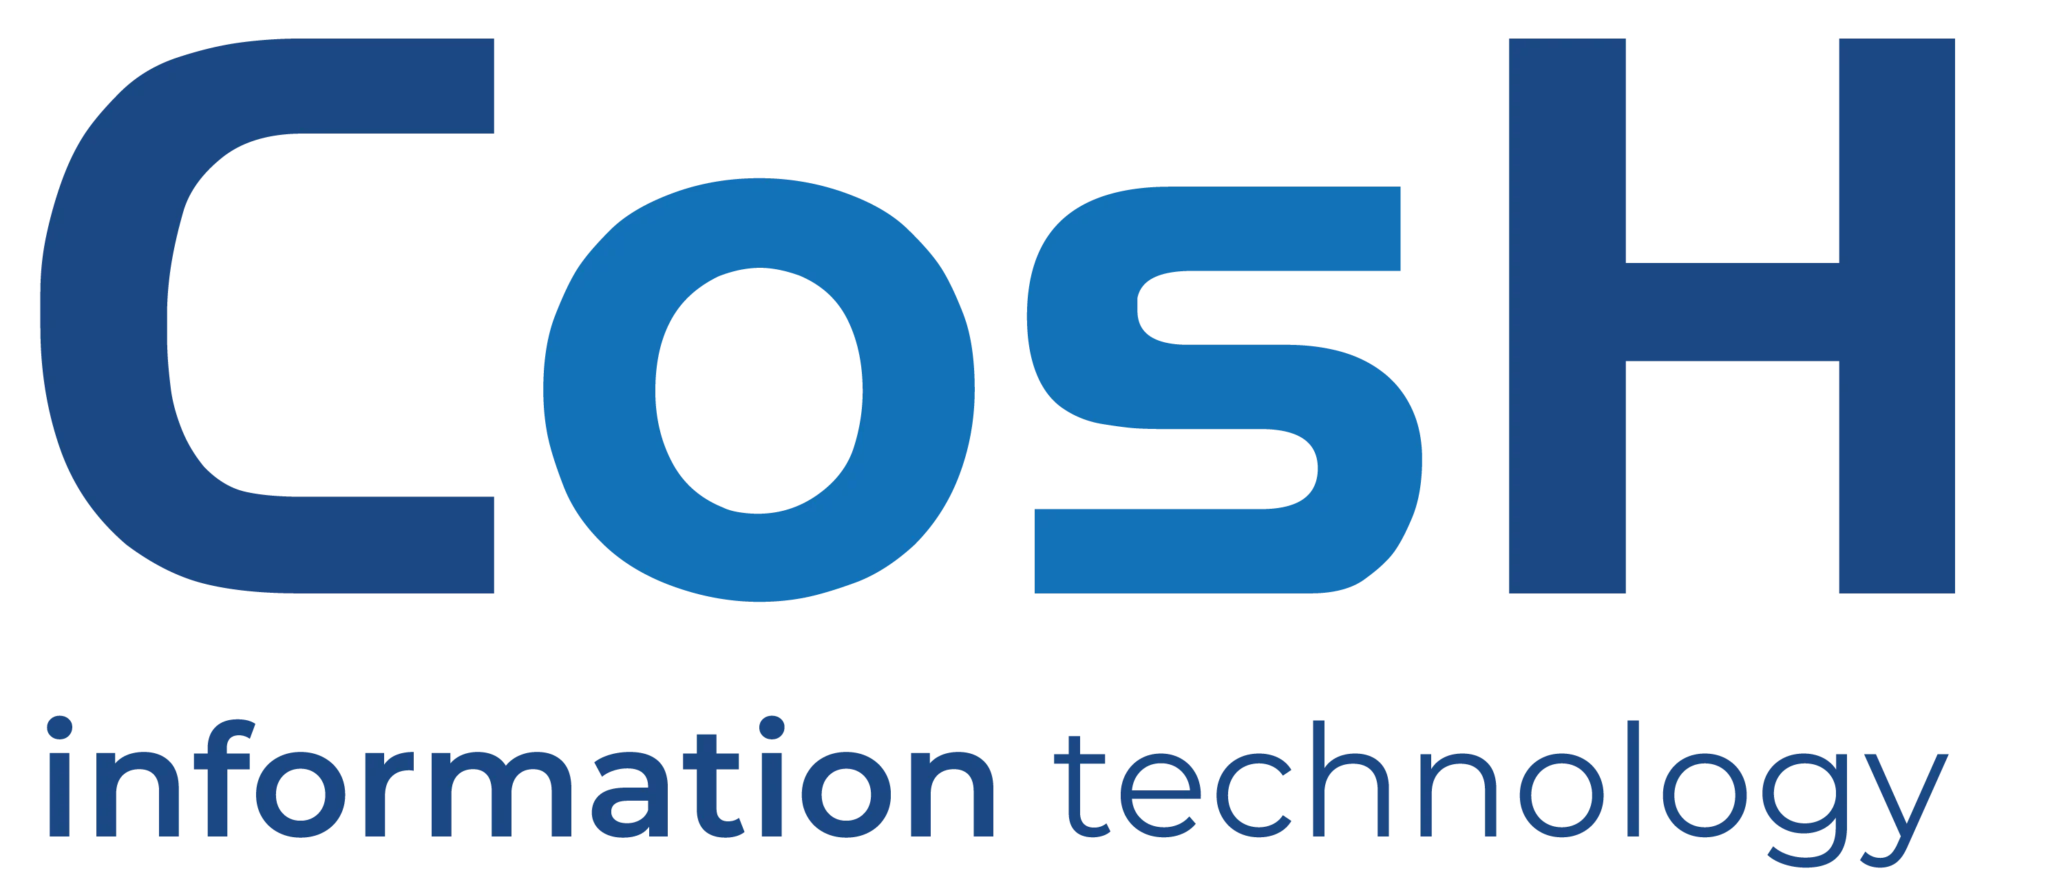 CosH logo 